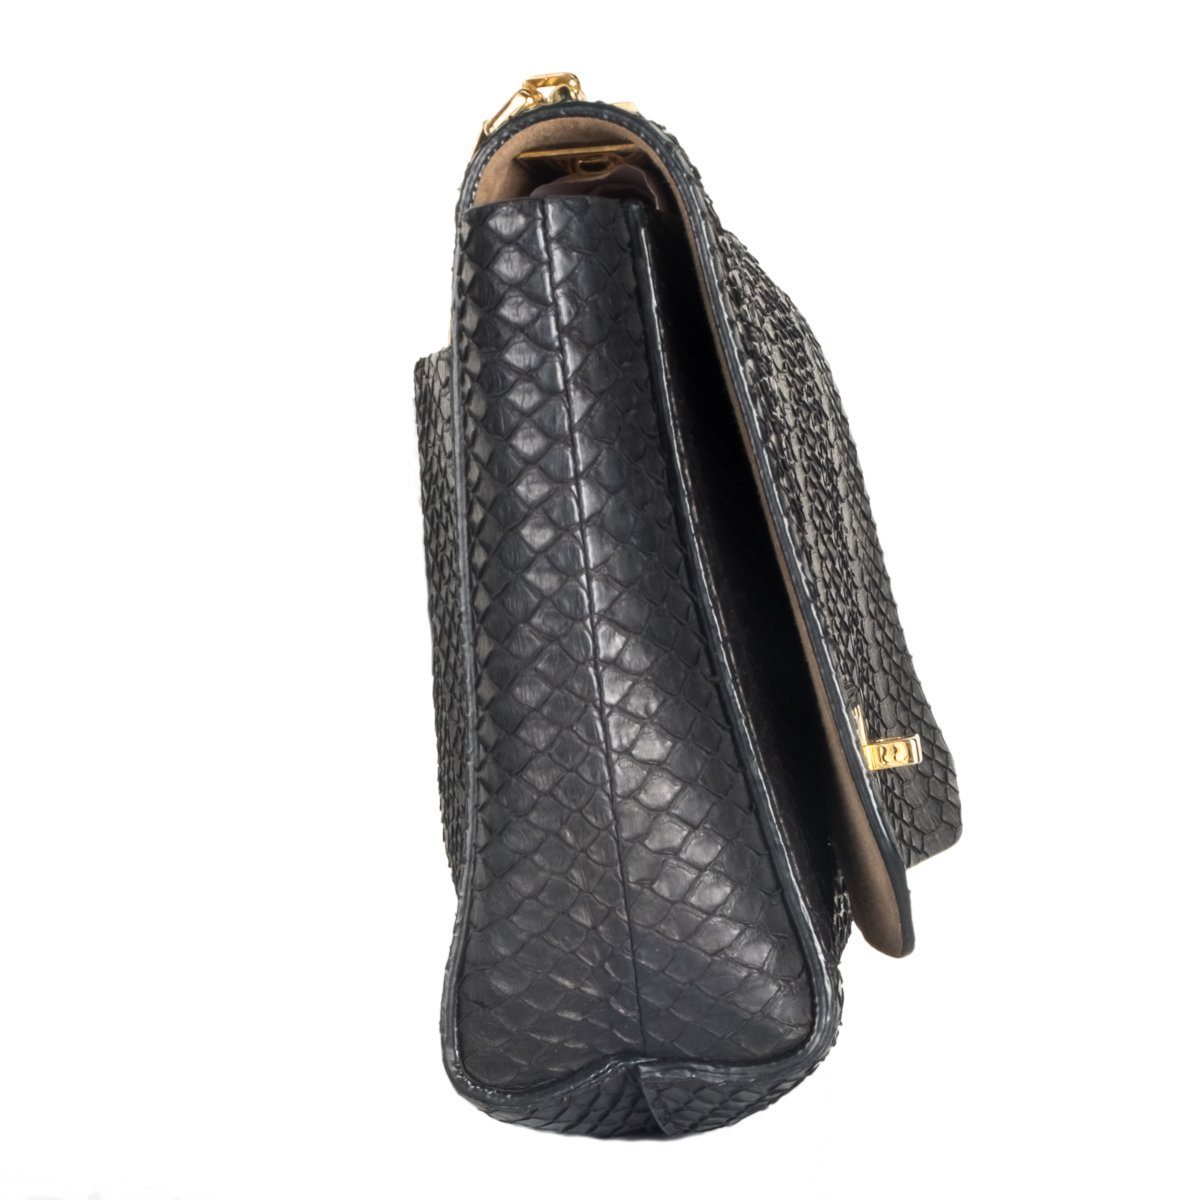 Michael Kors Black Leather Snakeskin Shoulder Bag – TBC Consignment